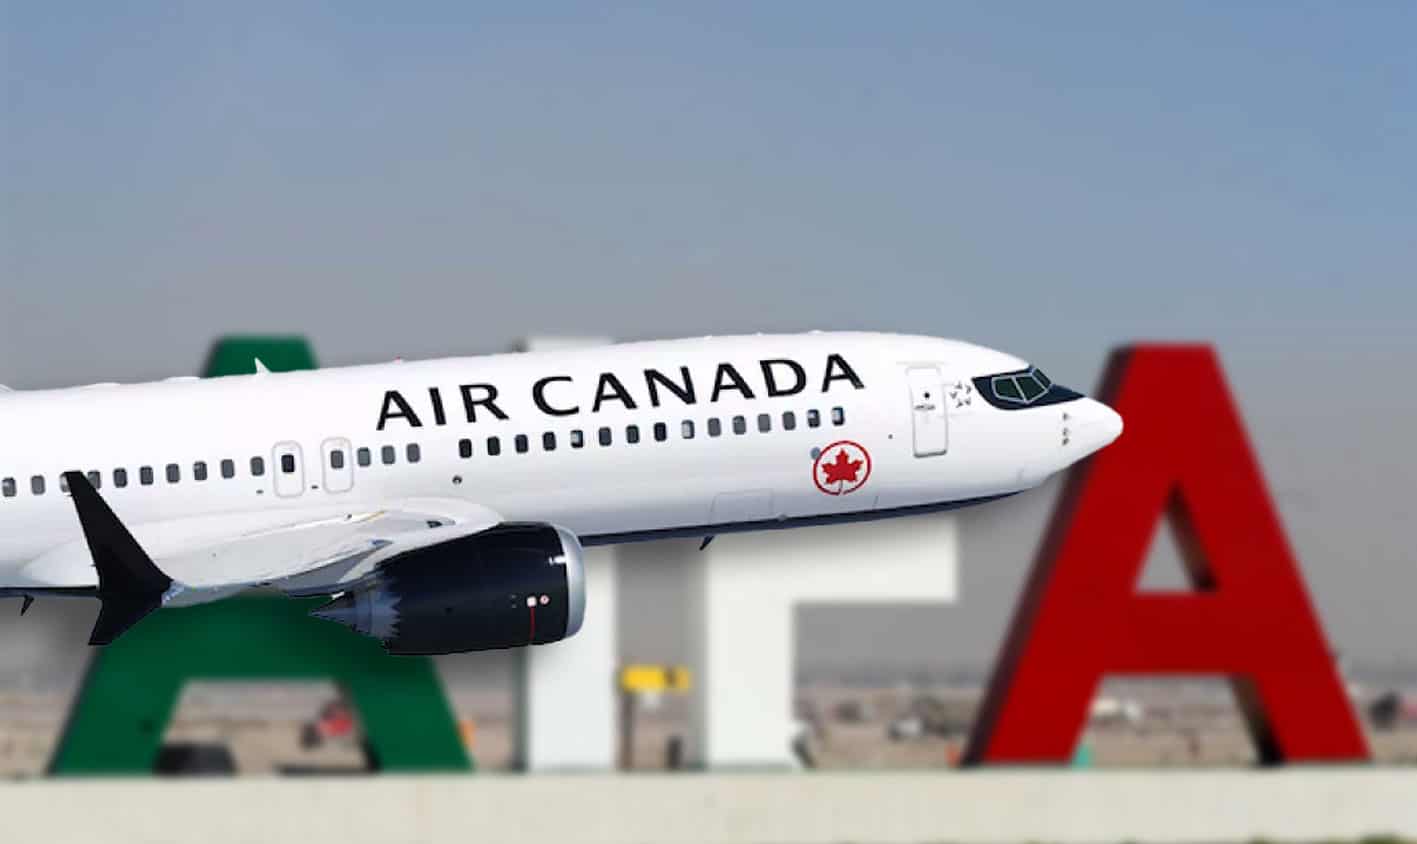 AIFA will receive Air Canada cargo operations in July